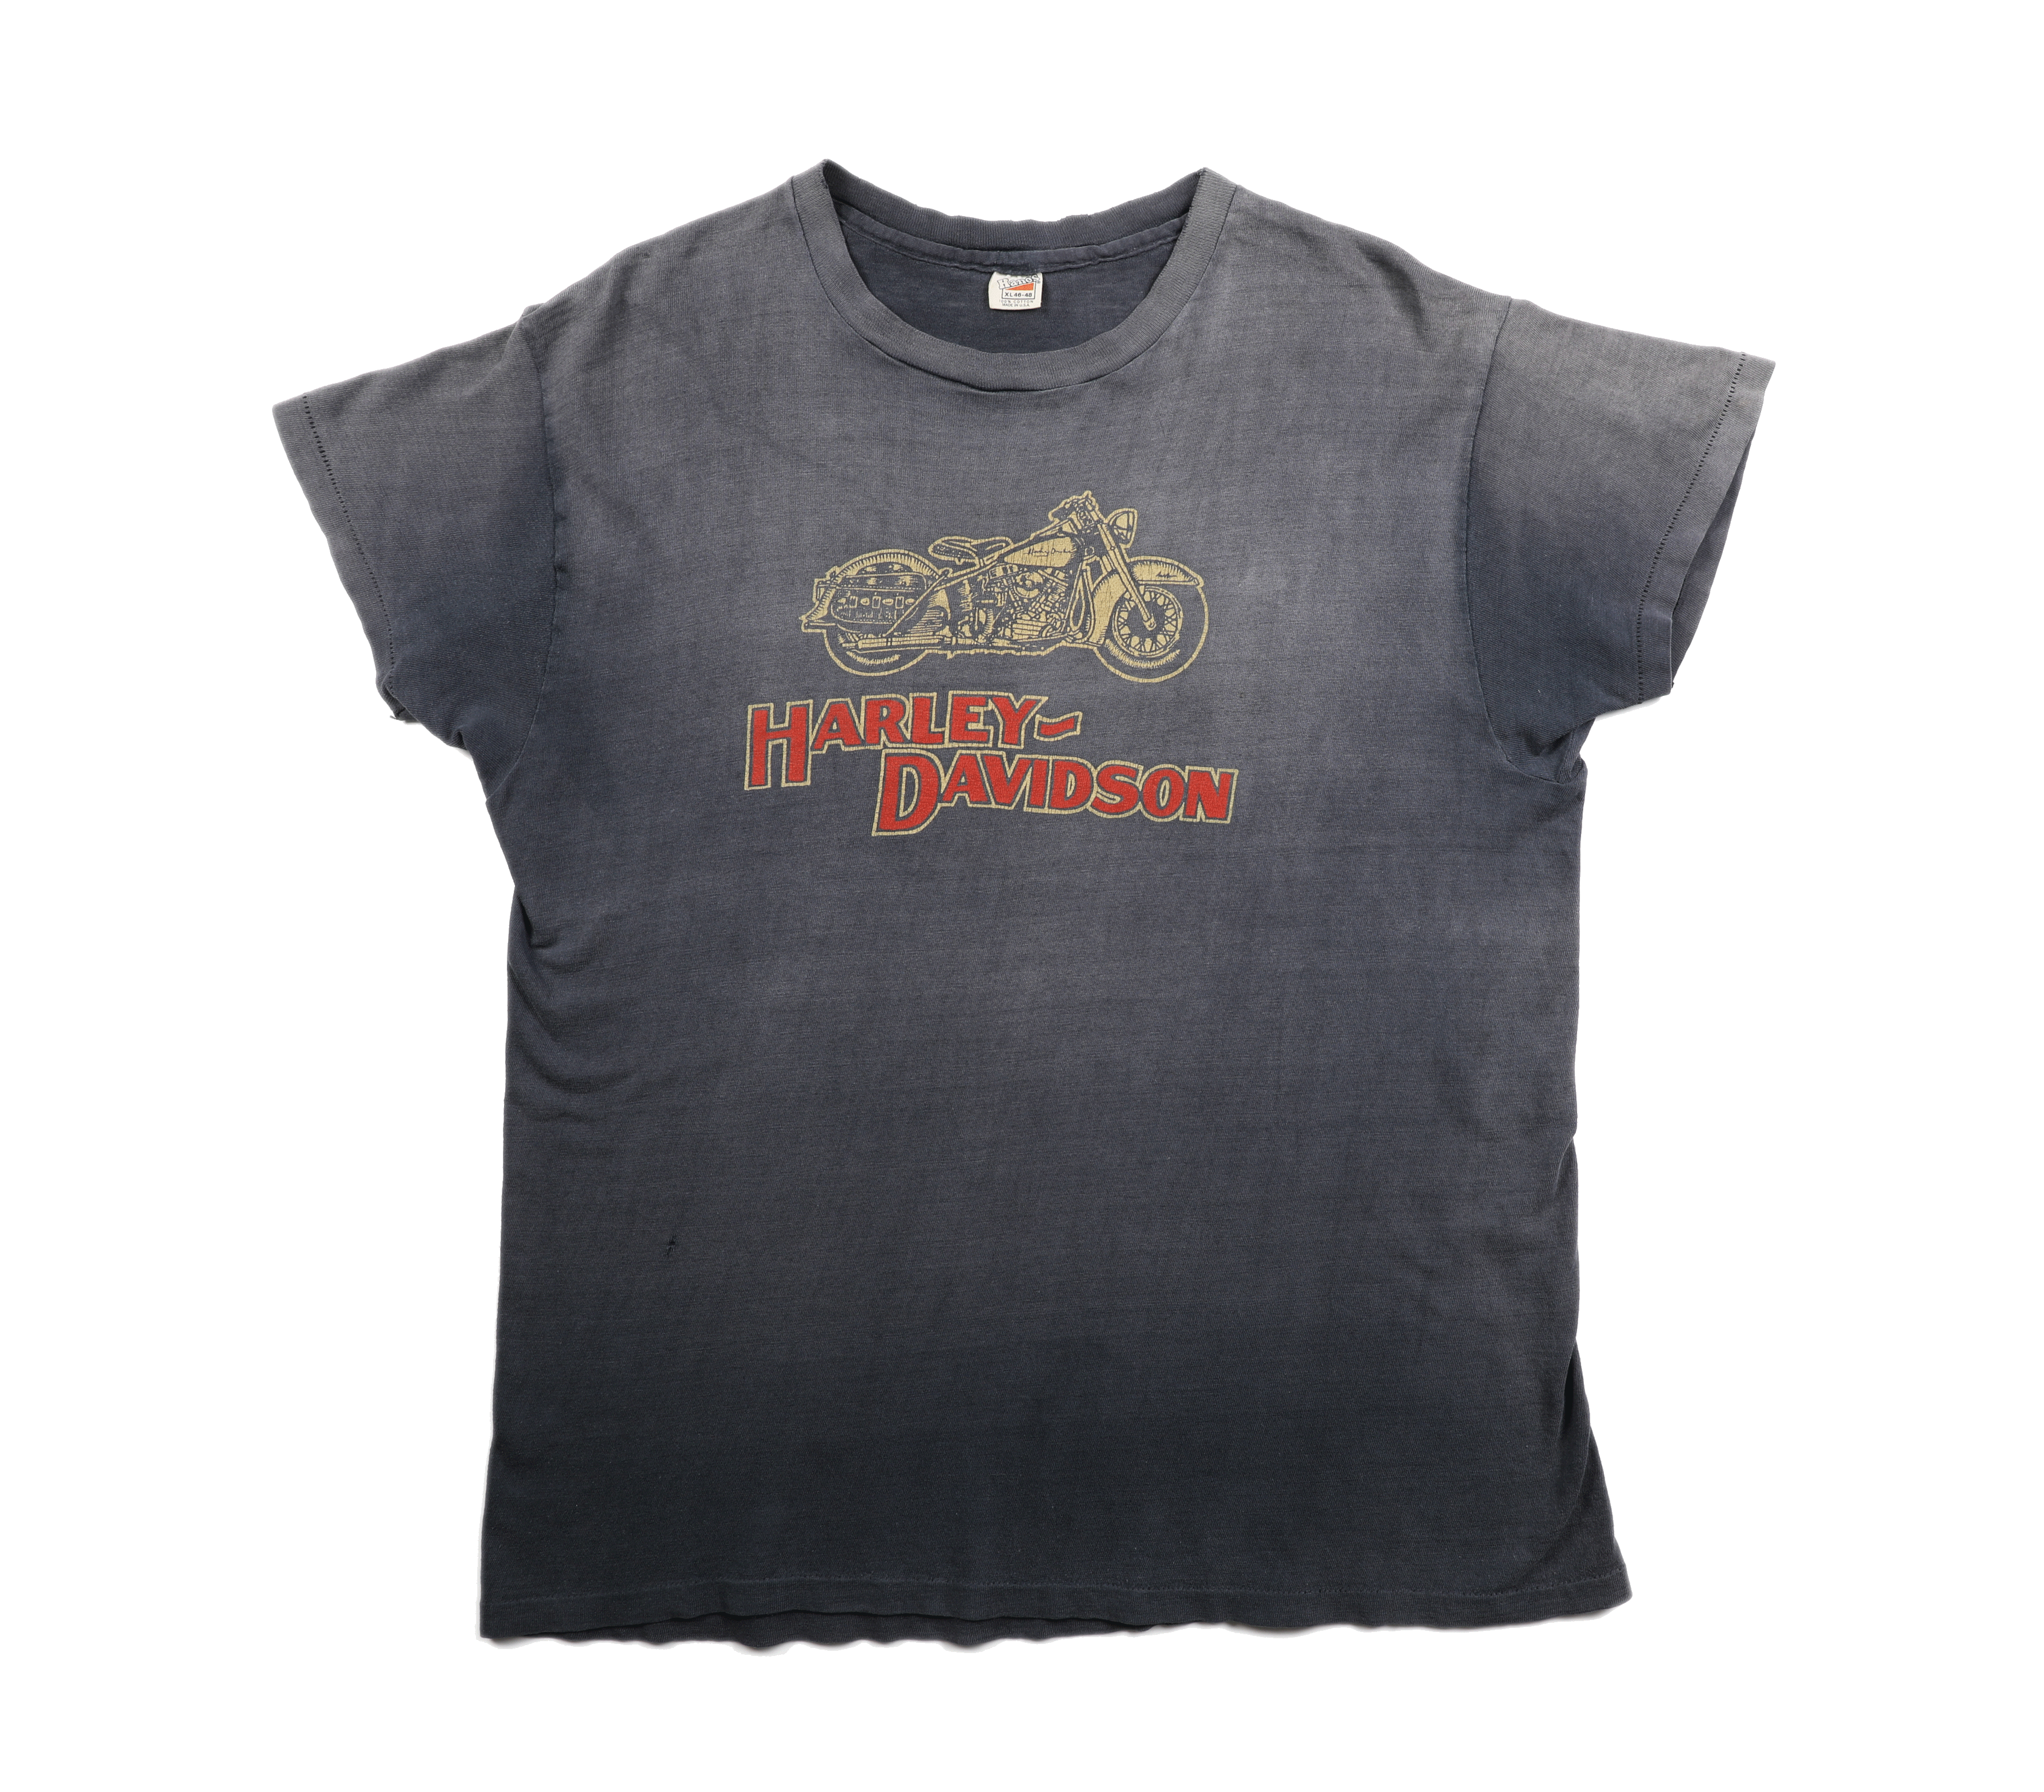 Vintage Champion Harley Davidson Tee Shirt – Vintage Rare